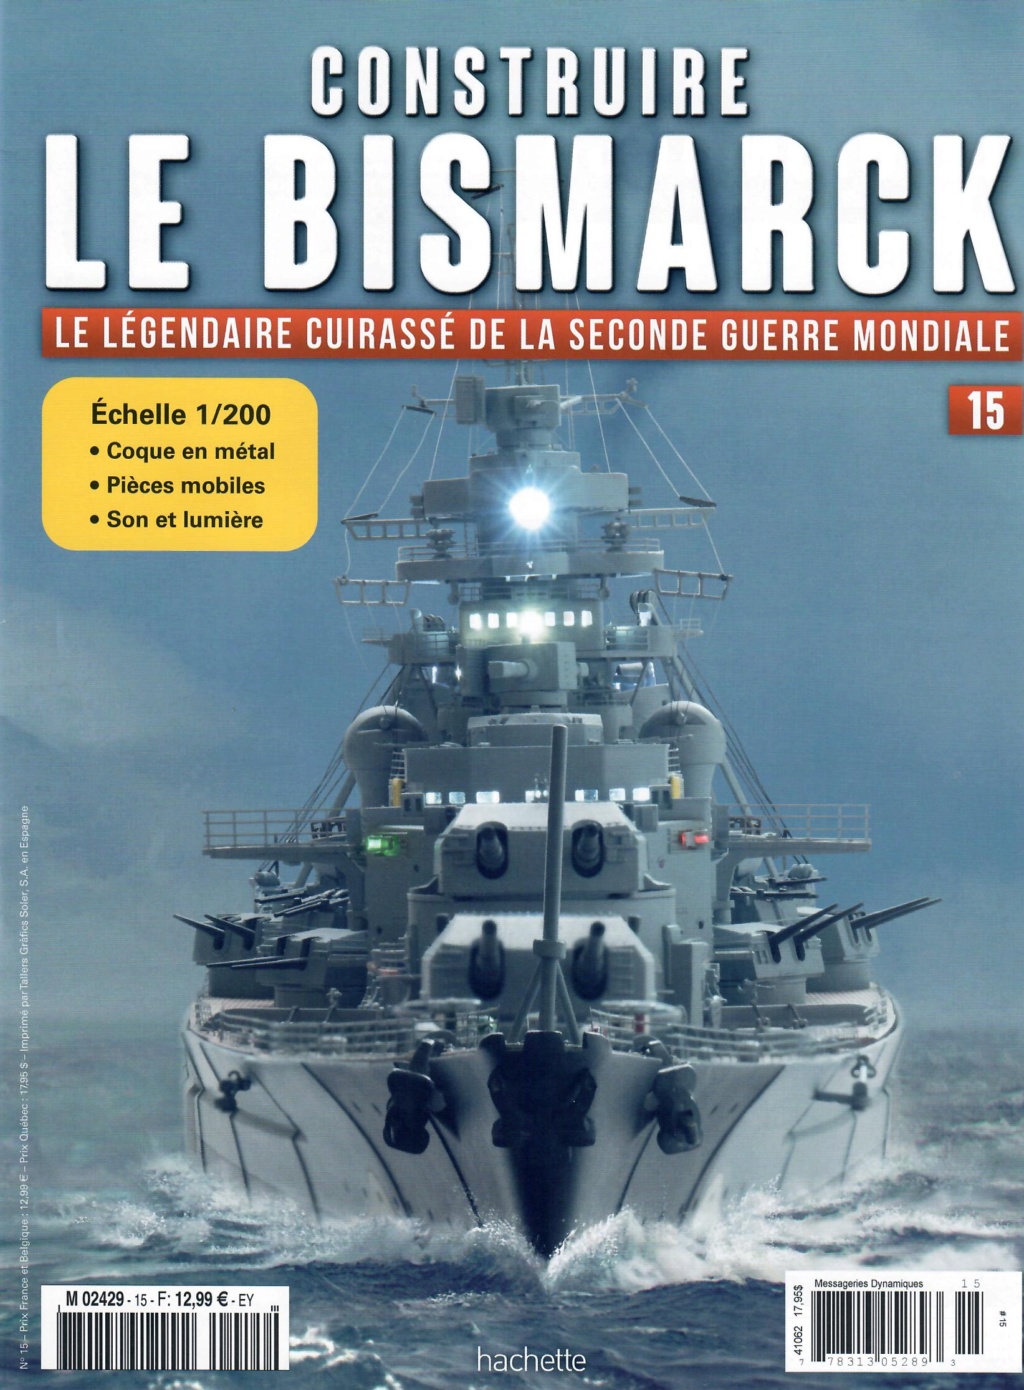 Bismarck - Hachette 1/200 par boks01 - Page 2 Bismar26